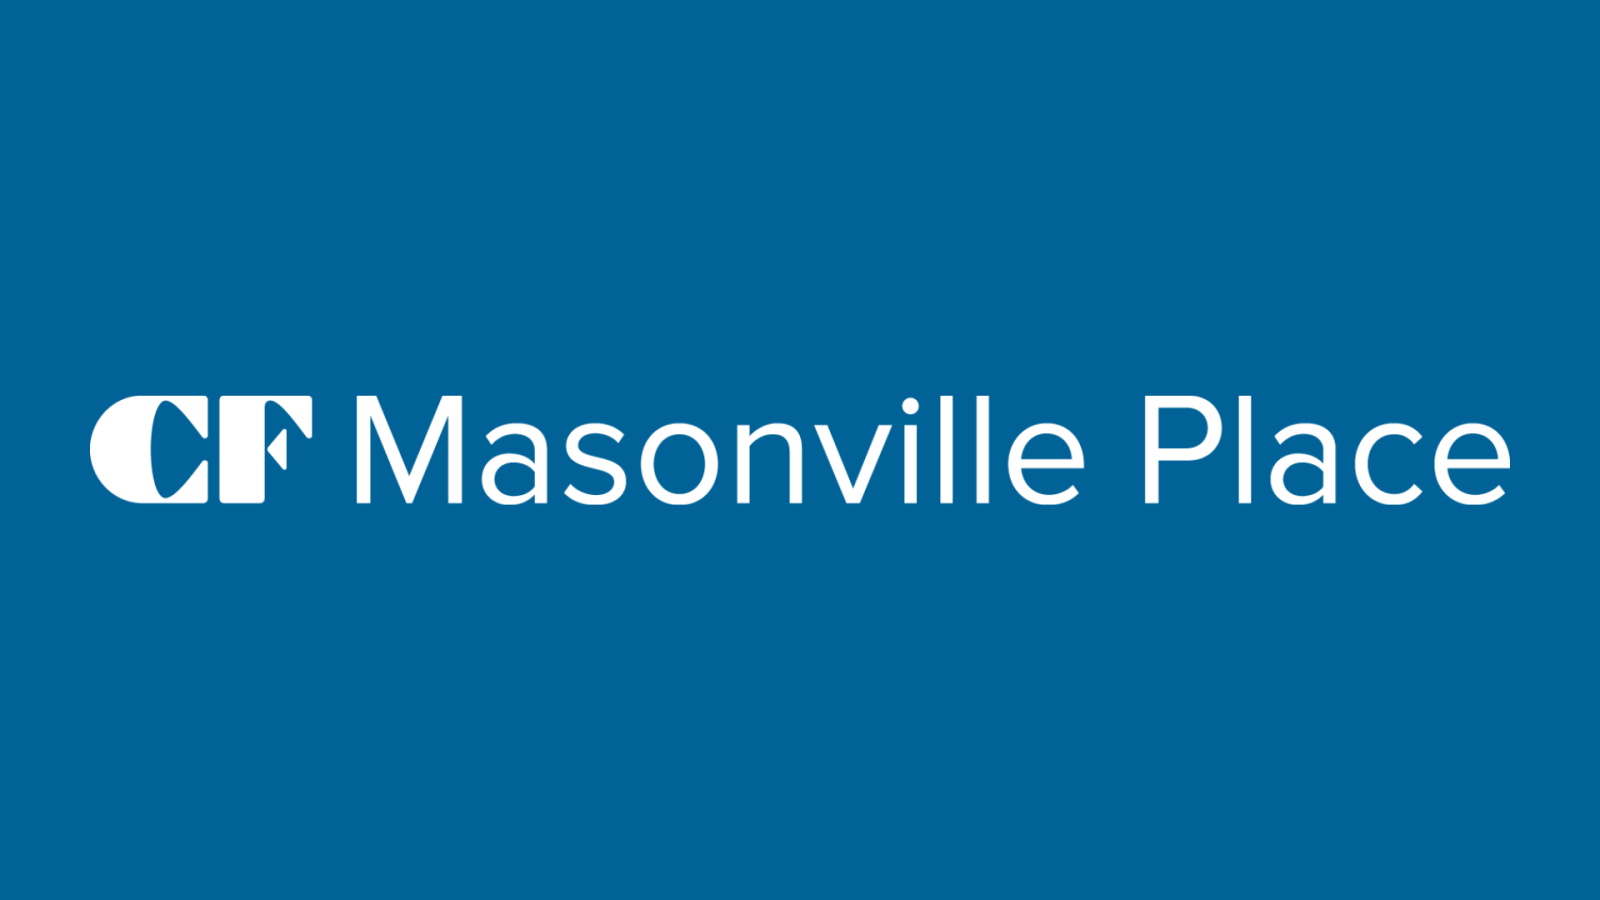 [CF Masonville Place] - New Retailer Openings Image